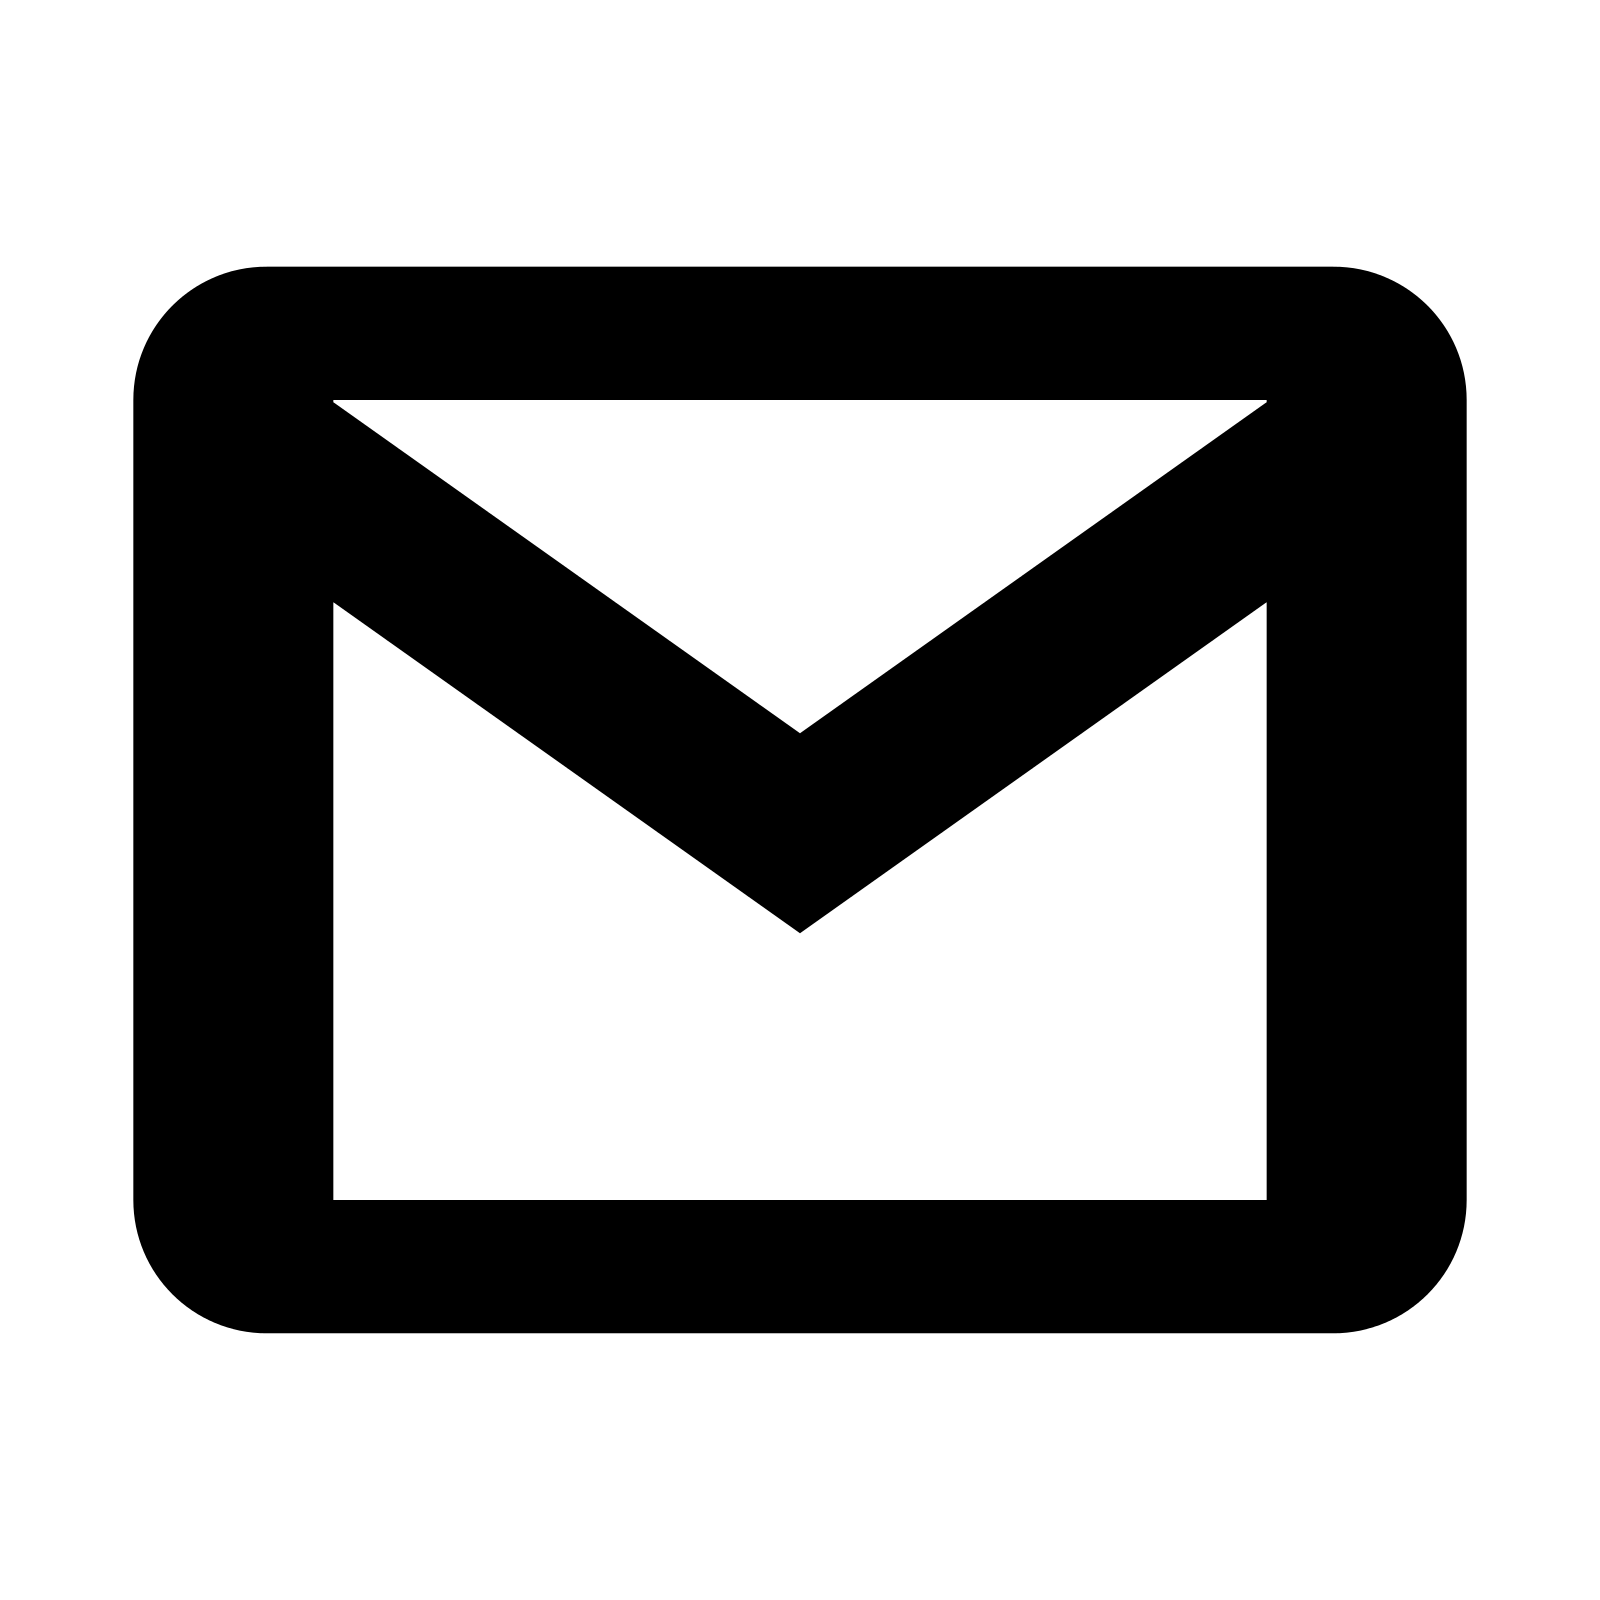 Gmail Logo - Gmail logo PNG images free download